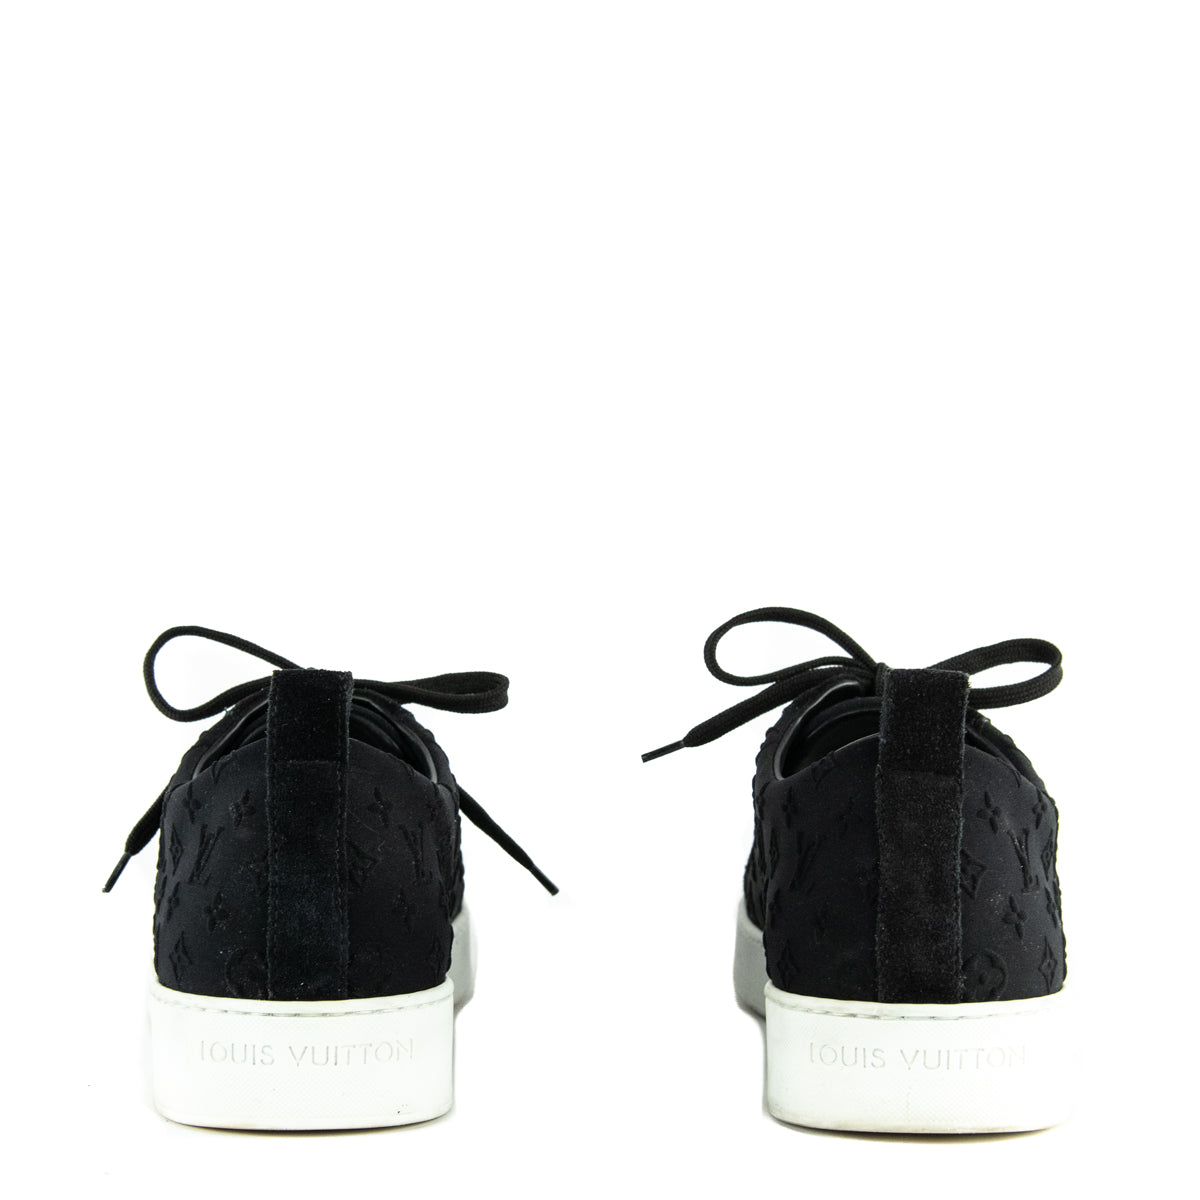 Louis Vuitton Black Suede Monogram Low Top Sneakers Size US 11 | EU 41 - Love that Bag etc - Preowned Authentic Designer Handbags & Preloved Fashions